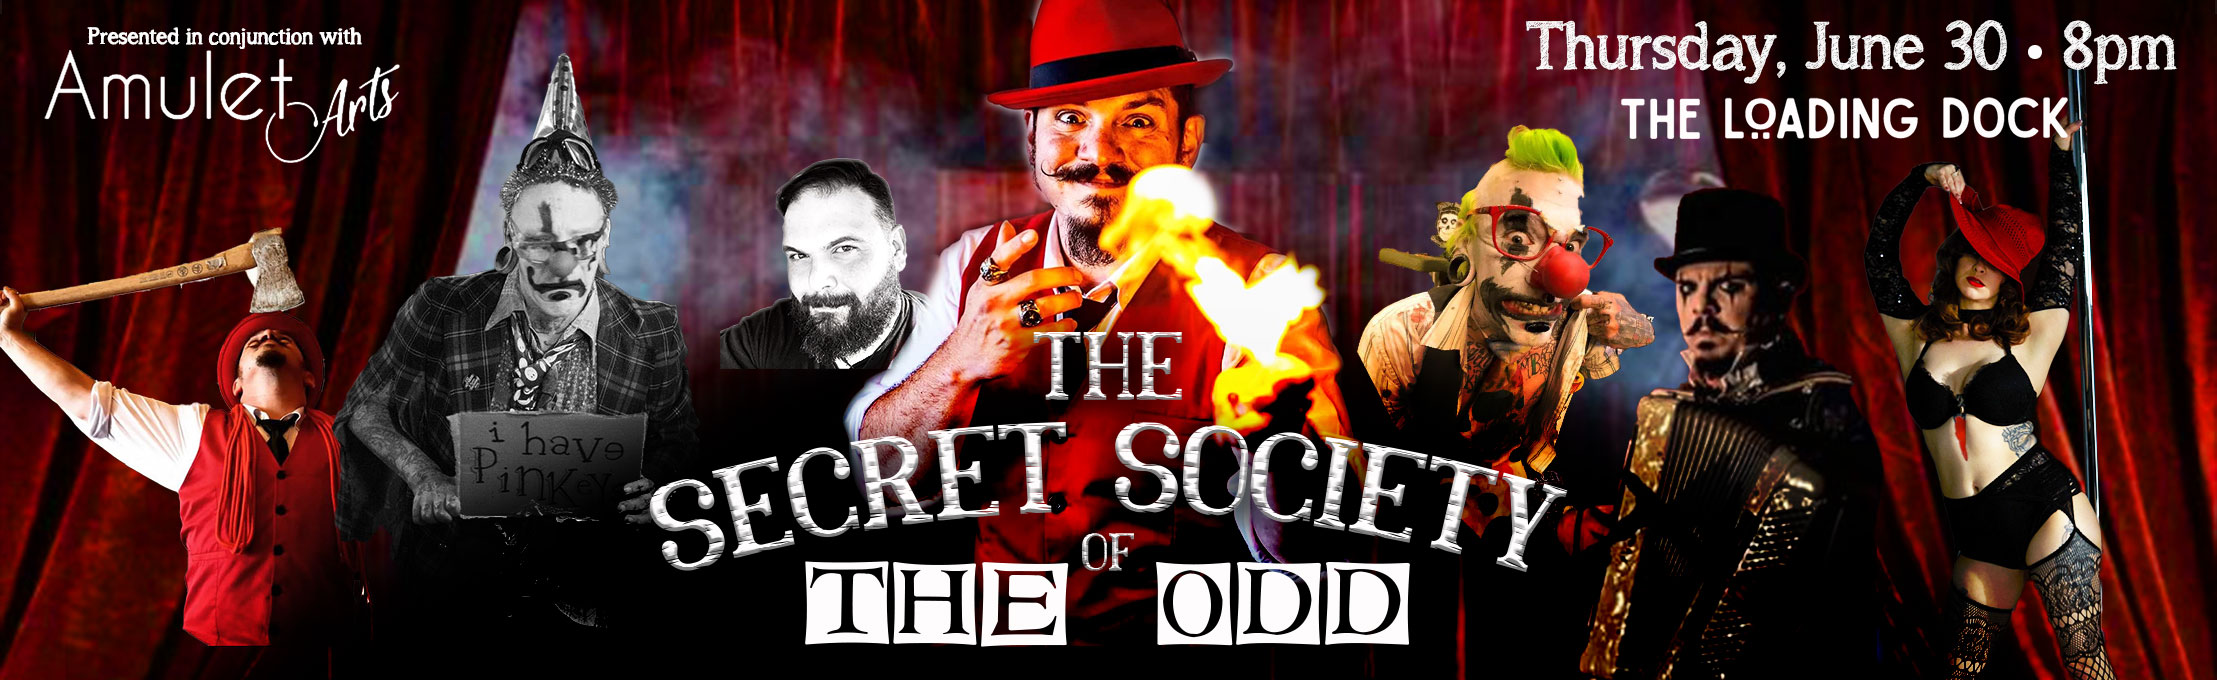 The Secret Society of the Odd